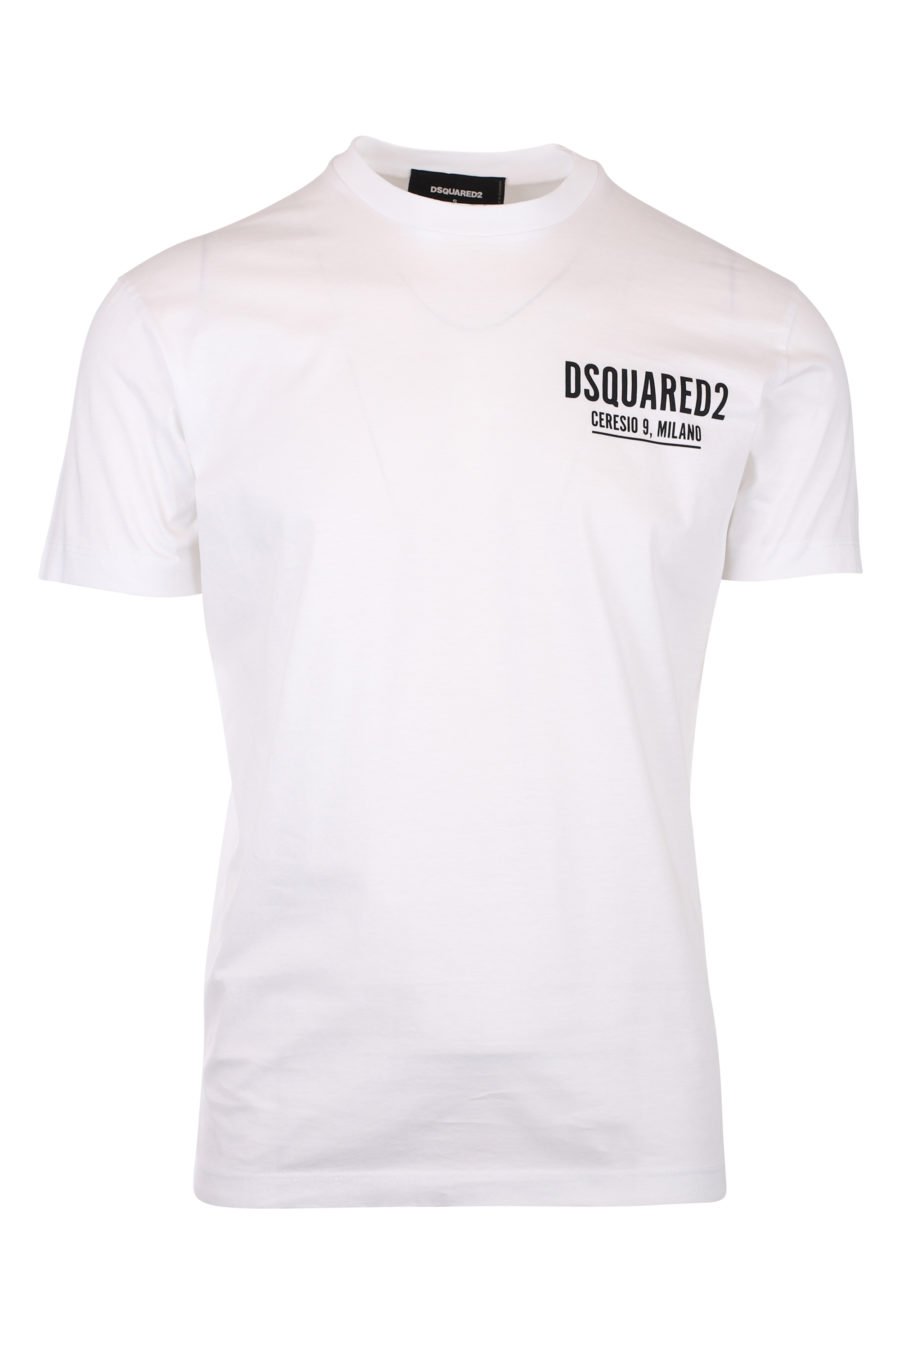 T-shirt blanc avec petit logo ceresio 9 - IMG 9784